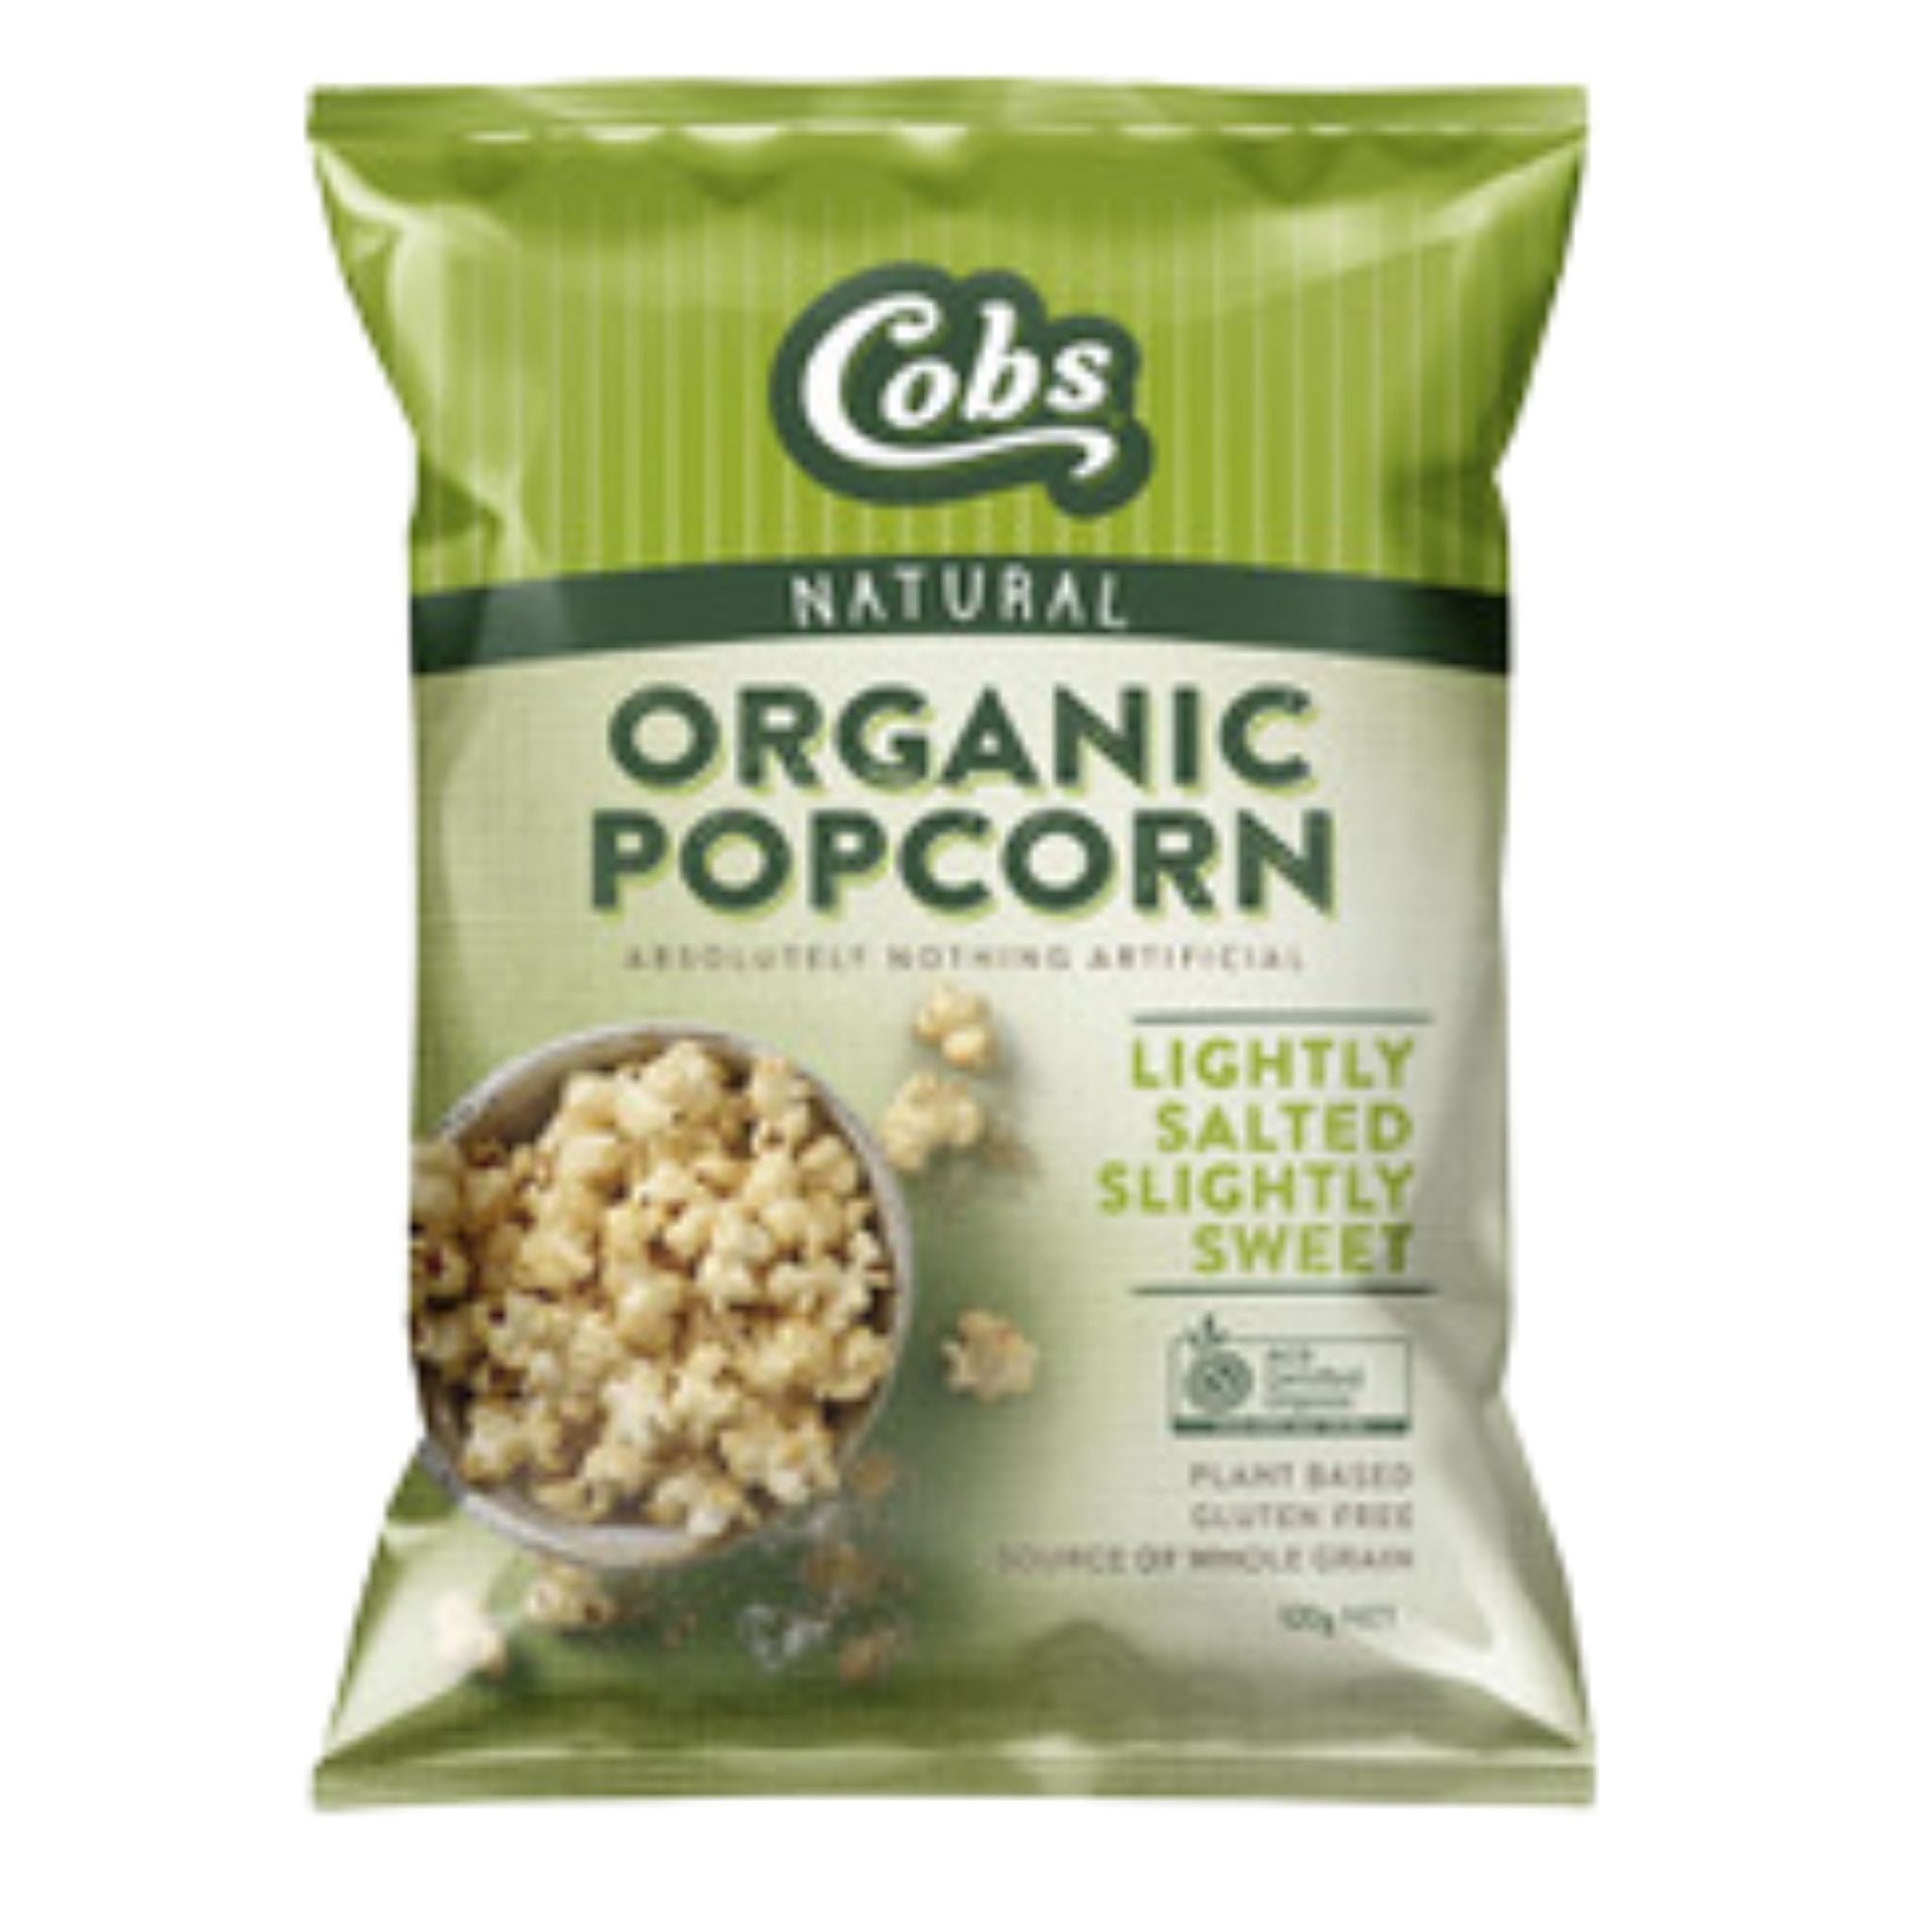 Popcorn (Organic) - Lightly Salted Slightly Sweet. Cobs. 120gr